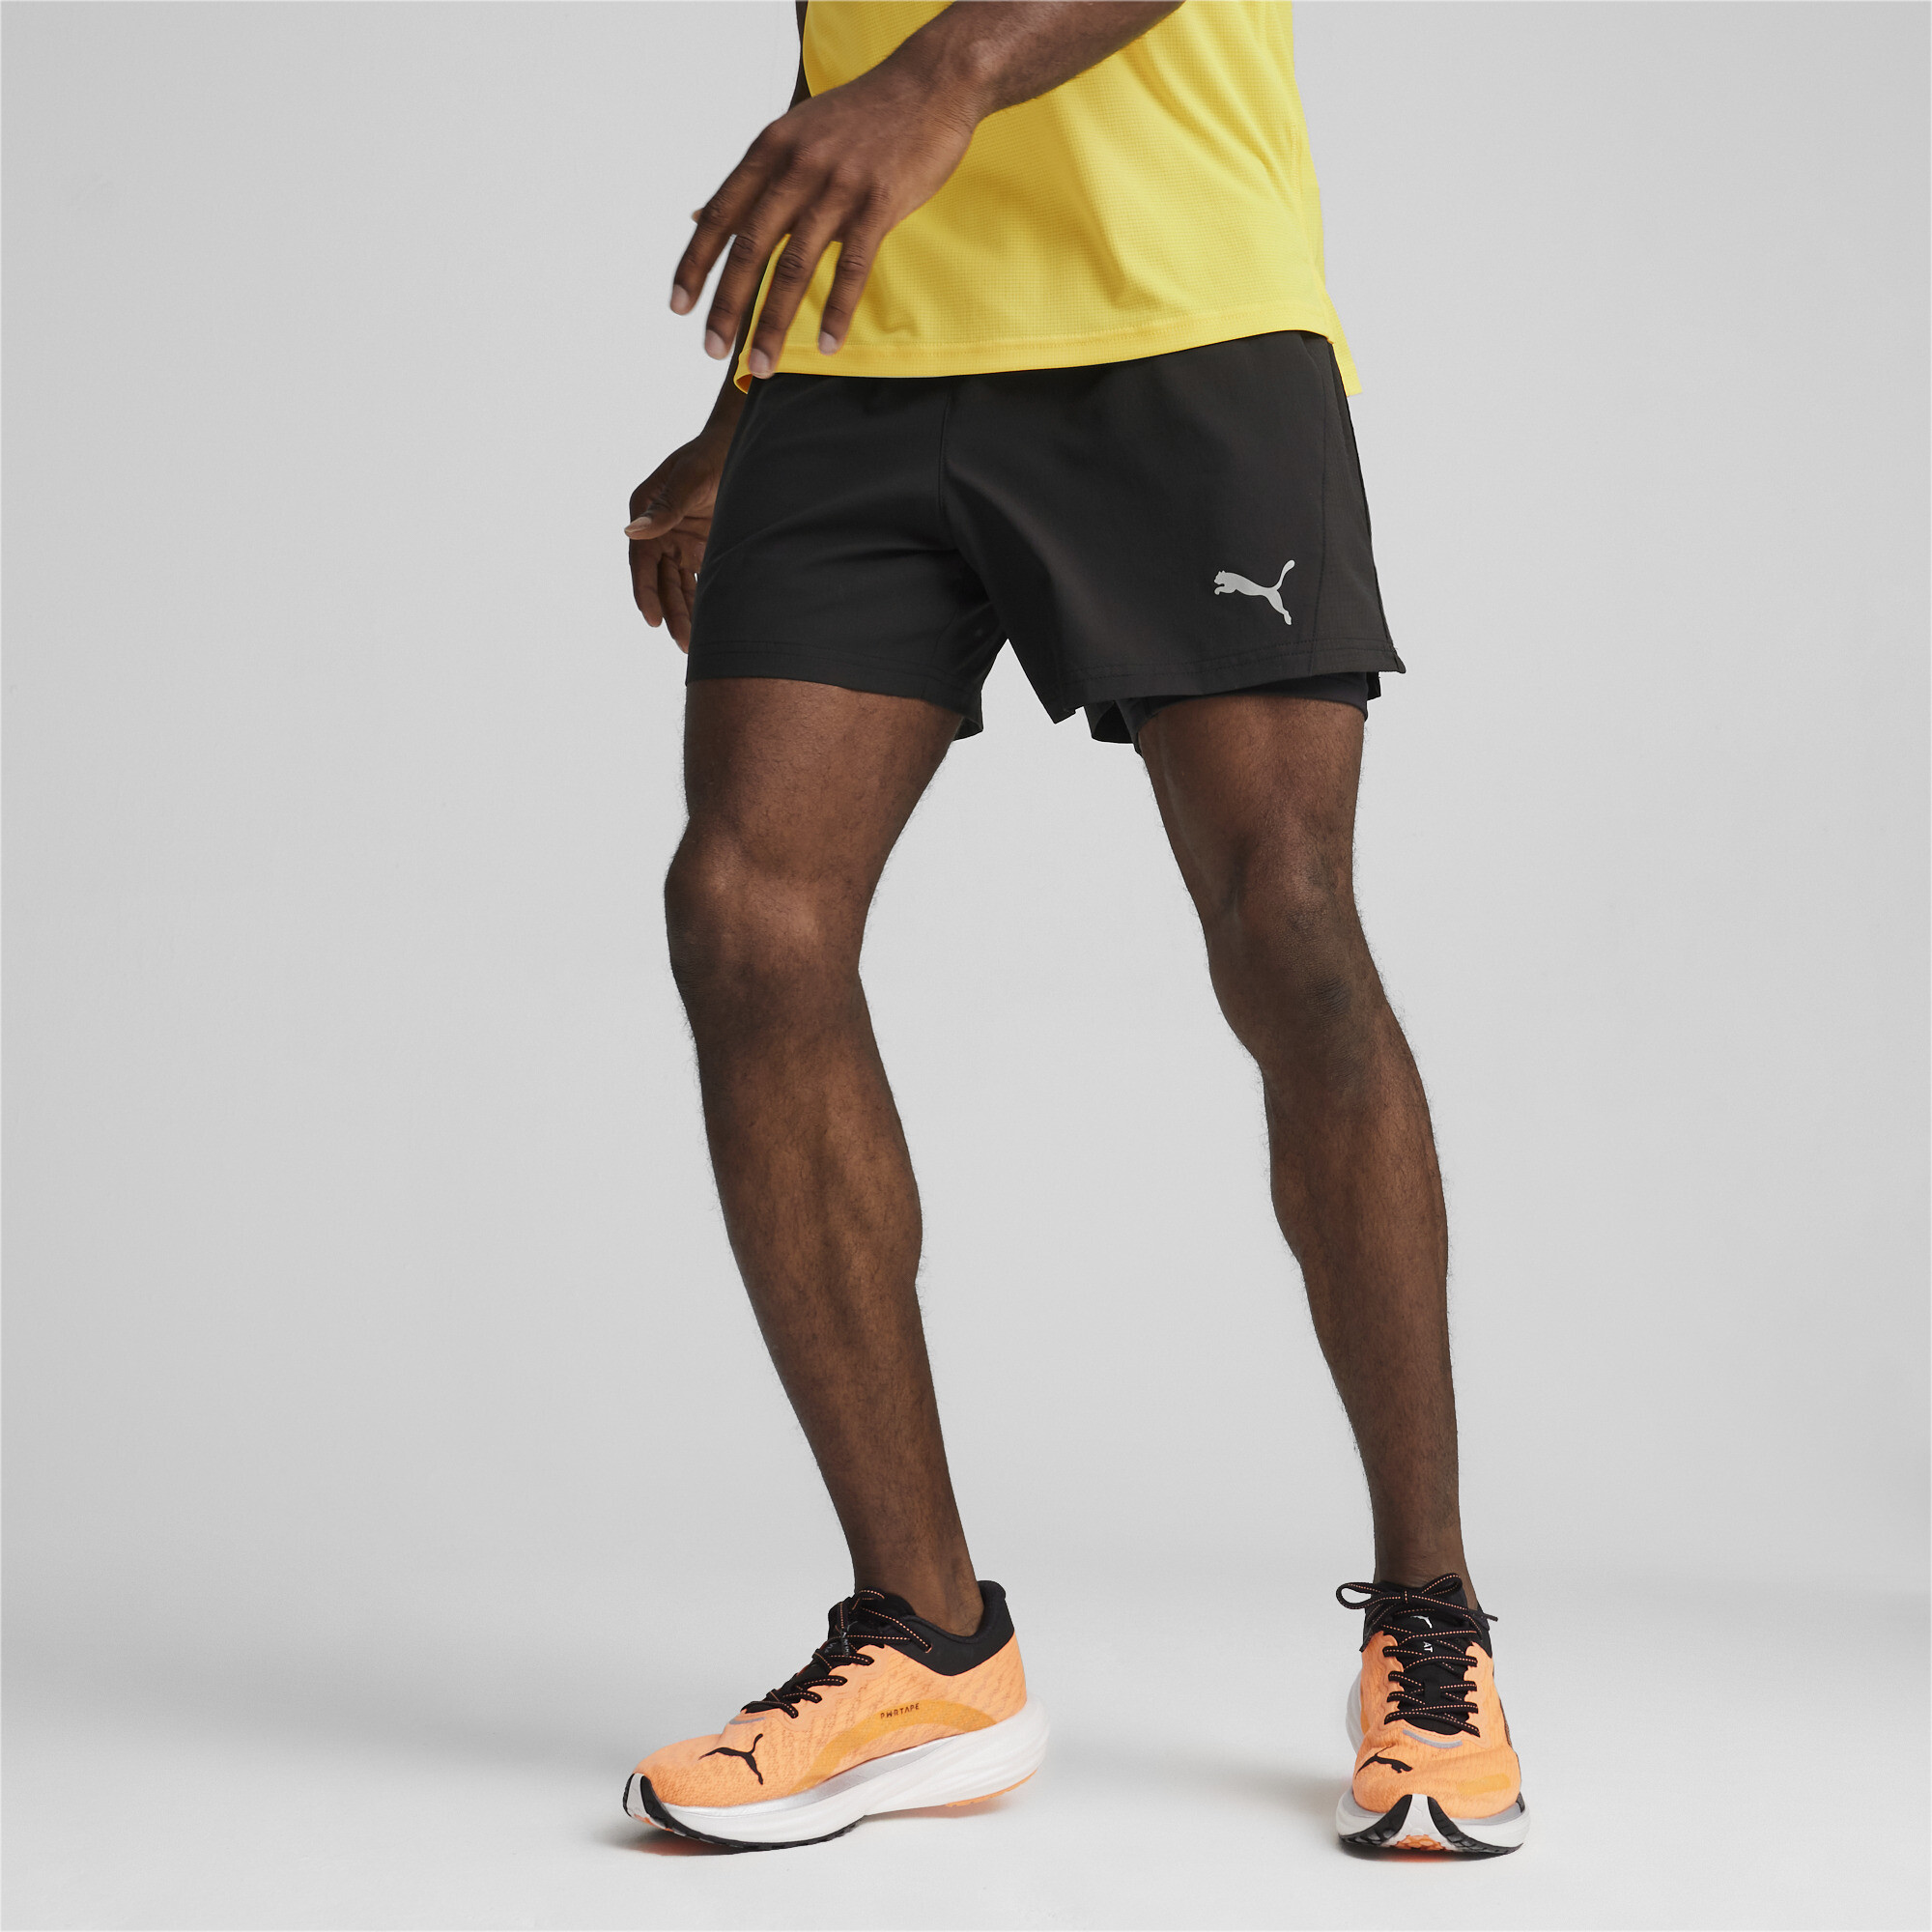 Men's PUMA Run Velocity ULTRAWEAVE 2-in-1 Running Shorts. In 10 - Black, Size 2XL